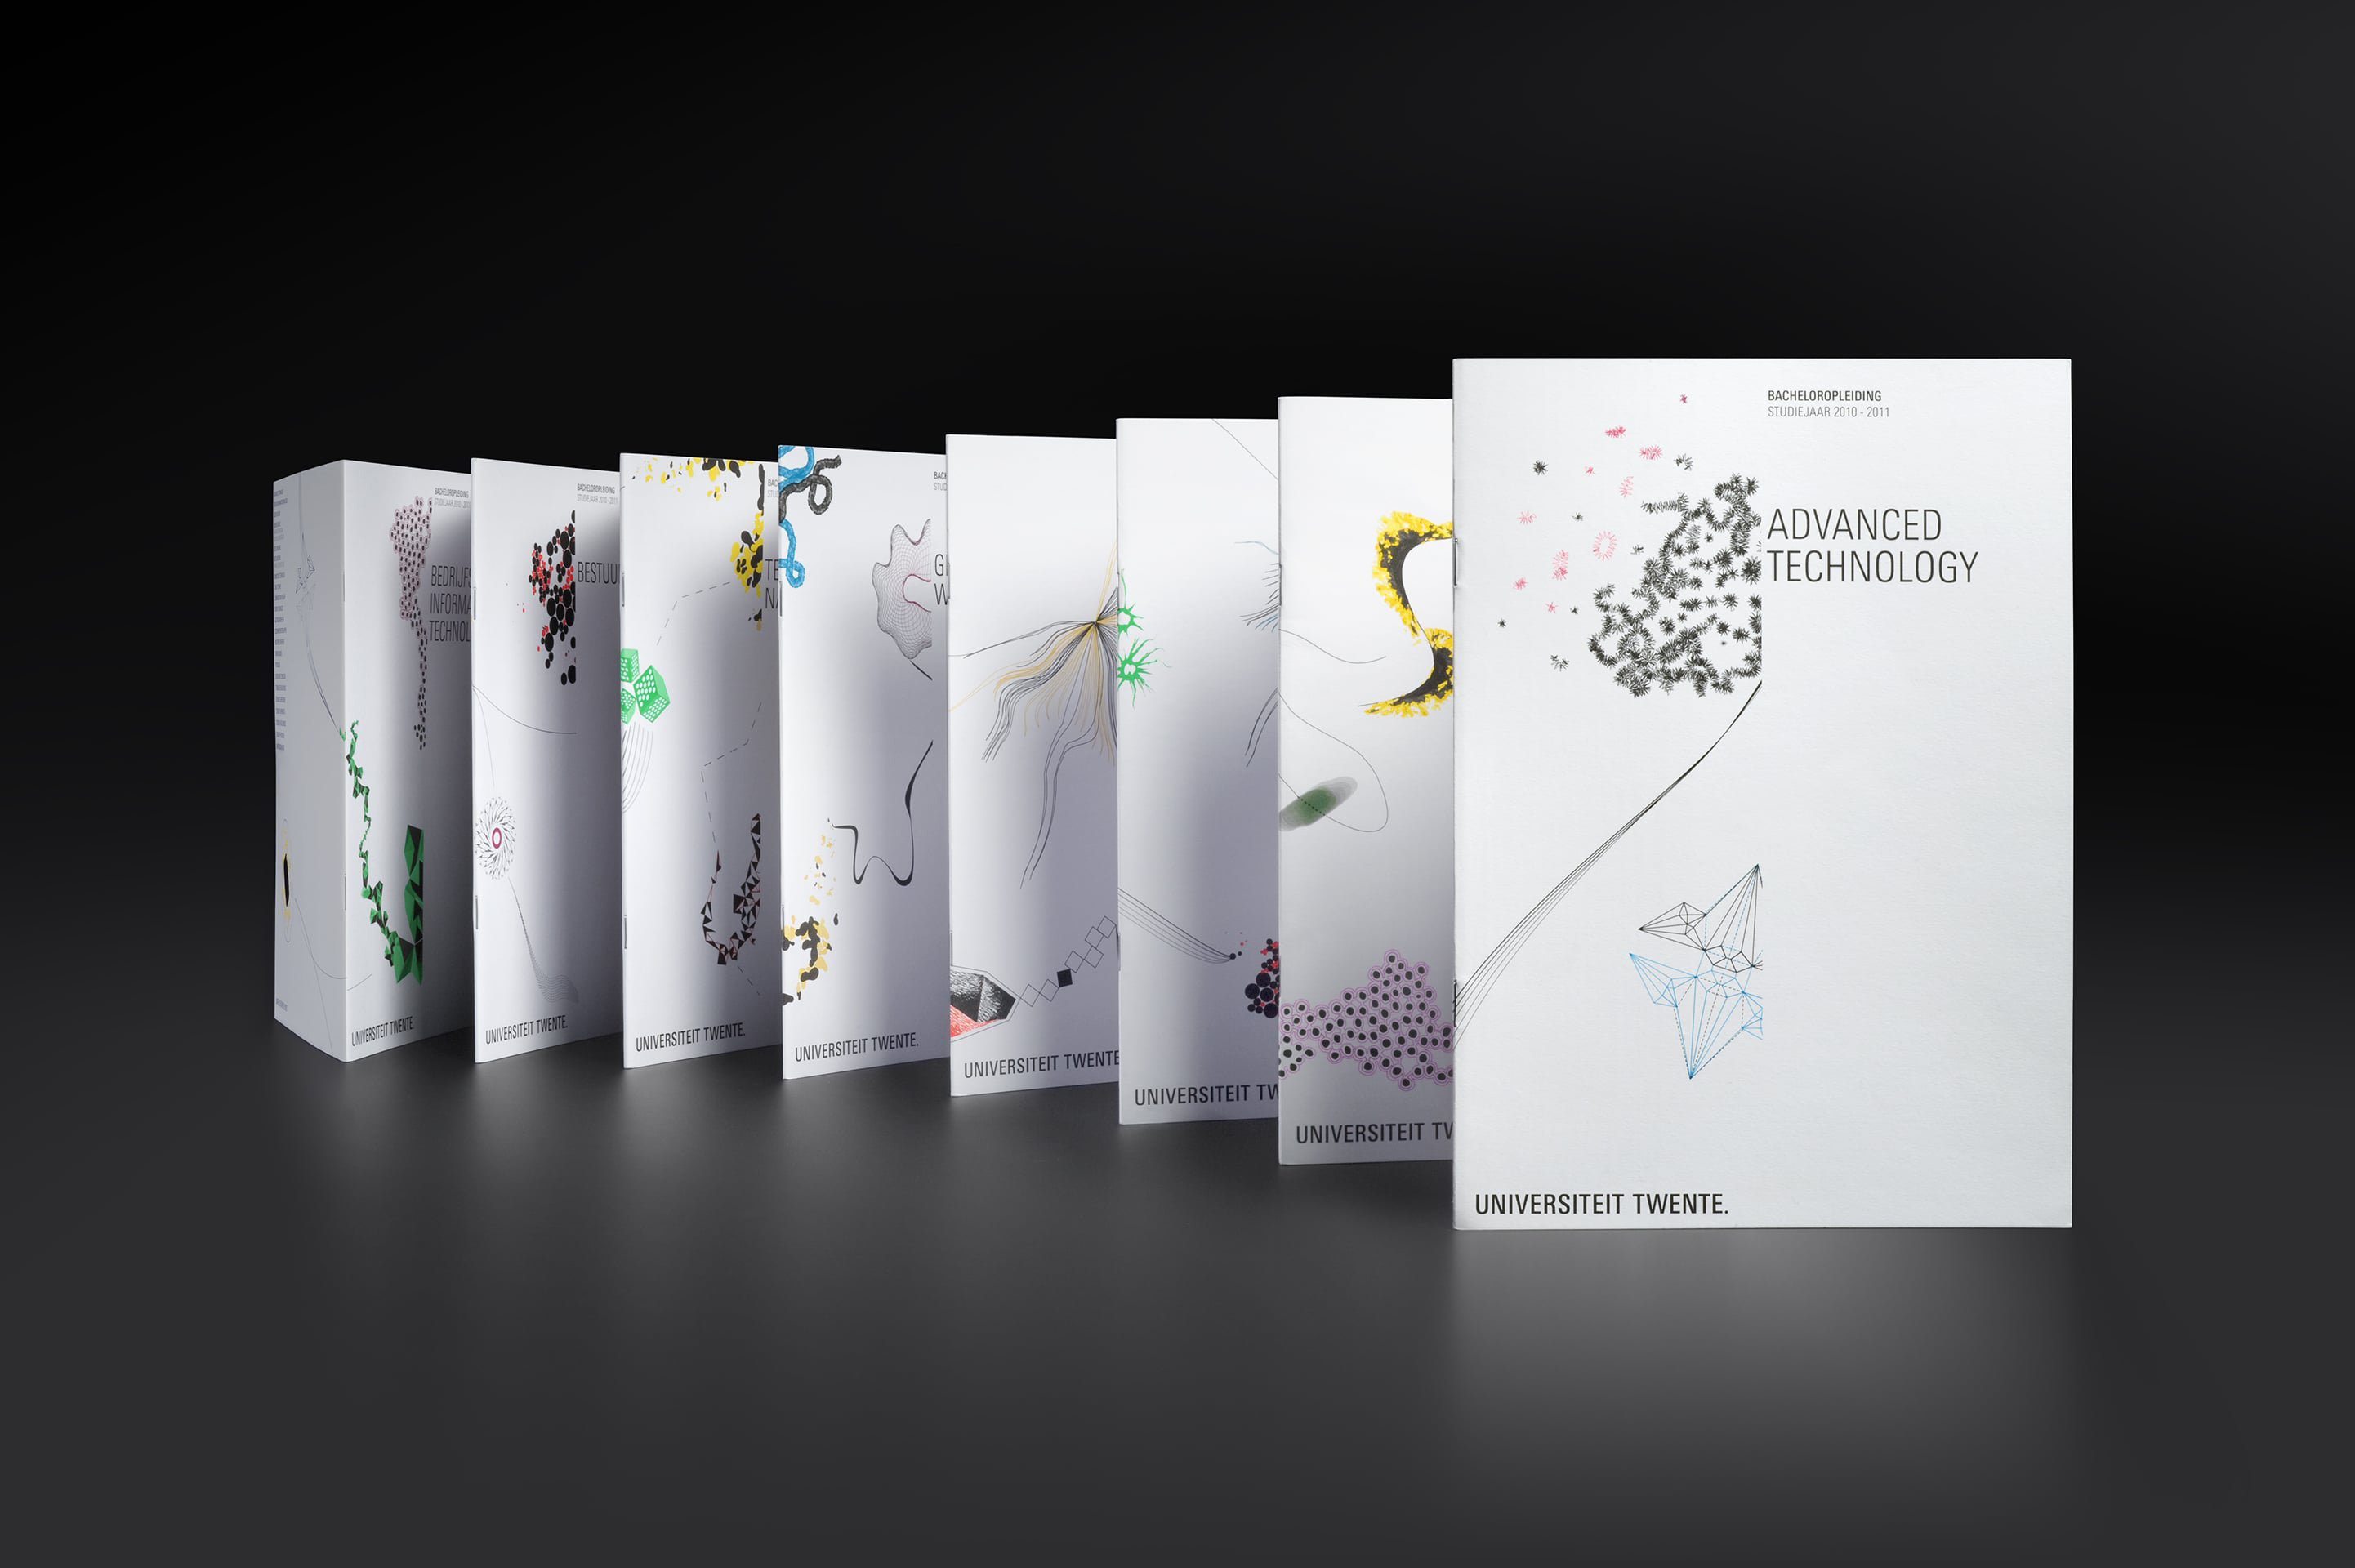 studio dumbar design visual brand identity for University of Twente Batchelor brochure design with Universe